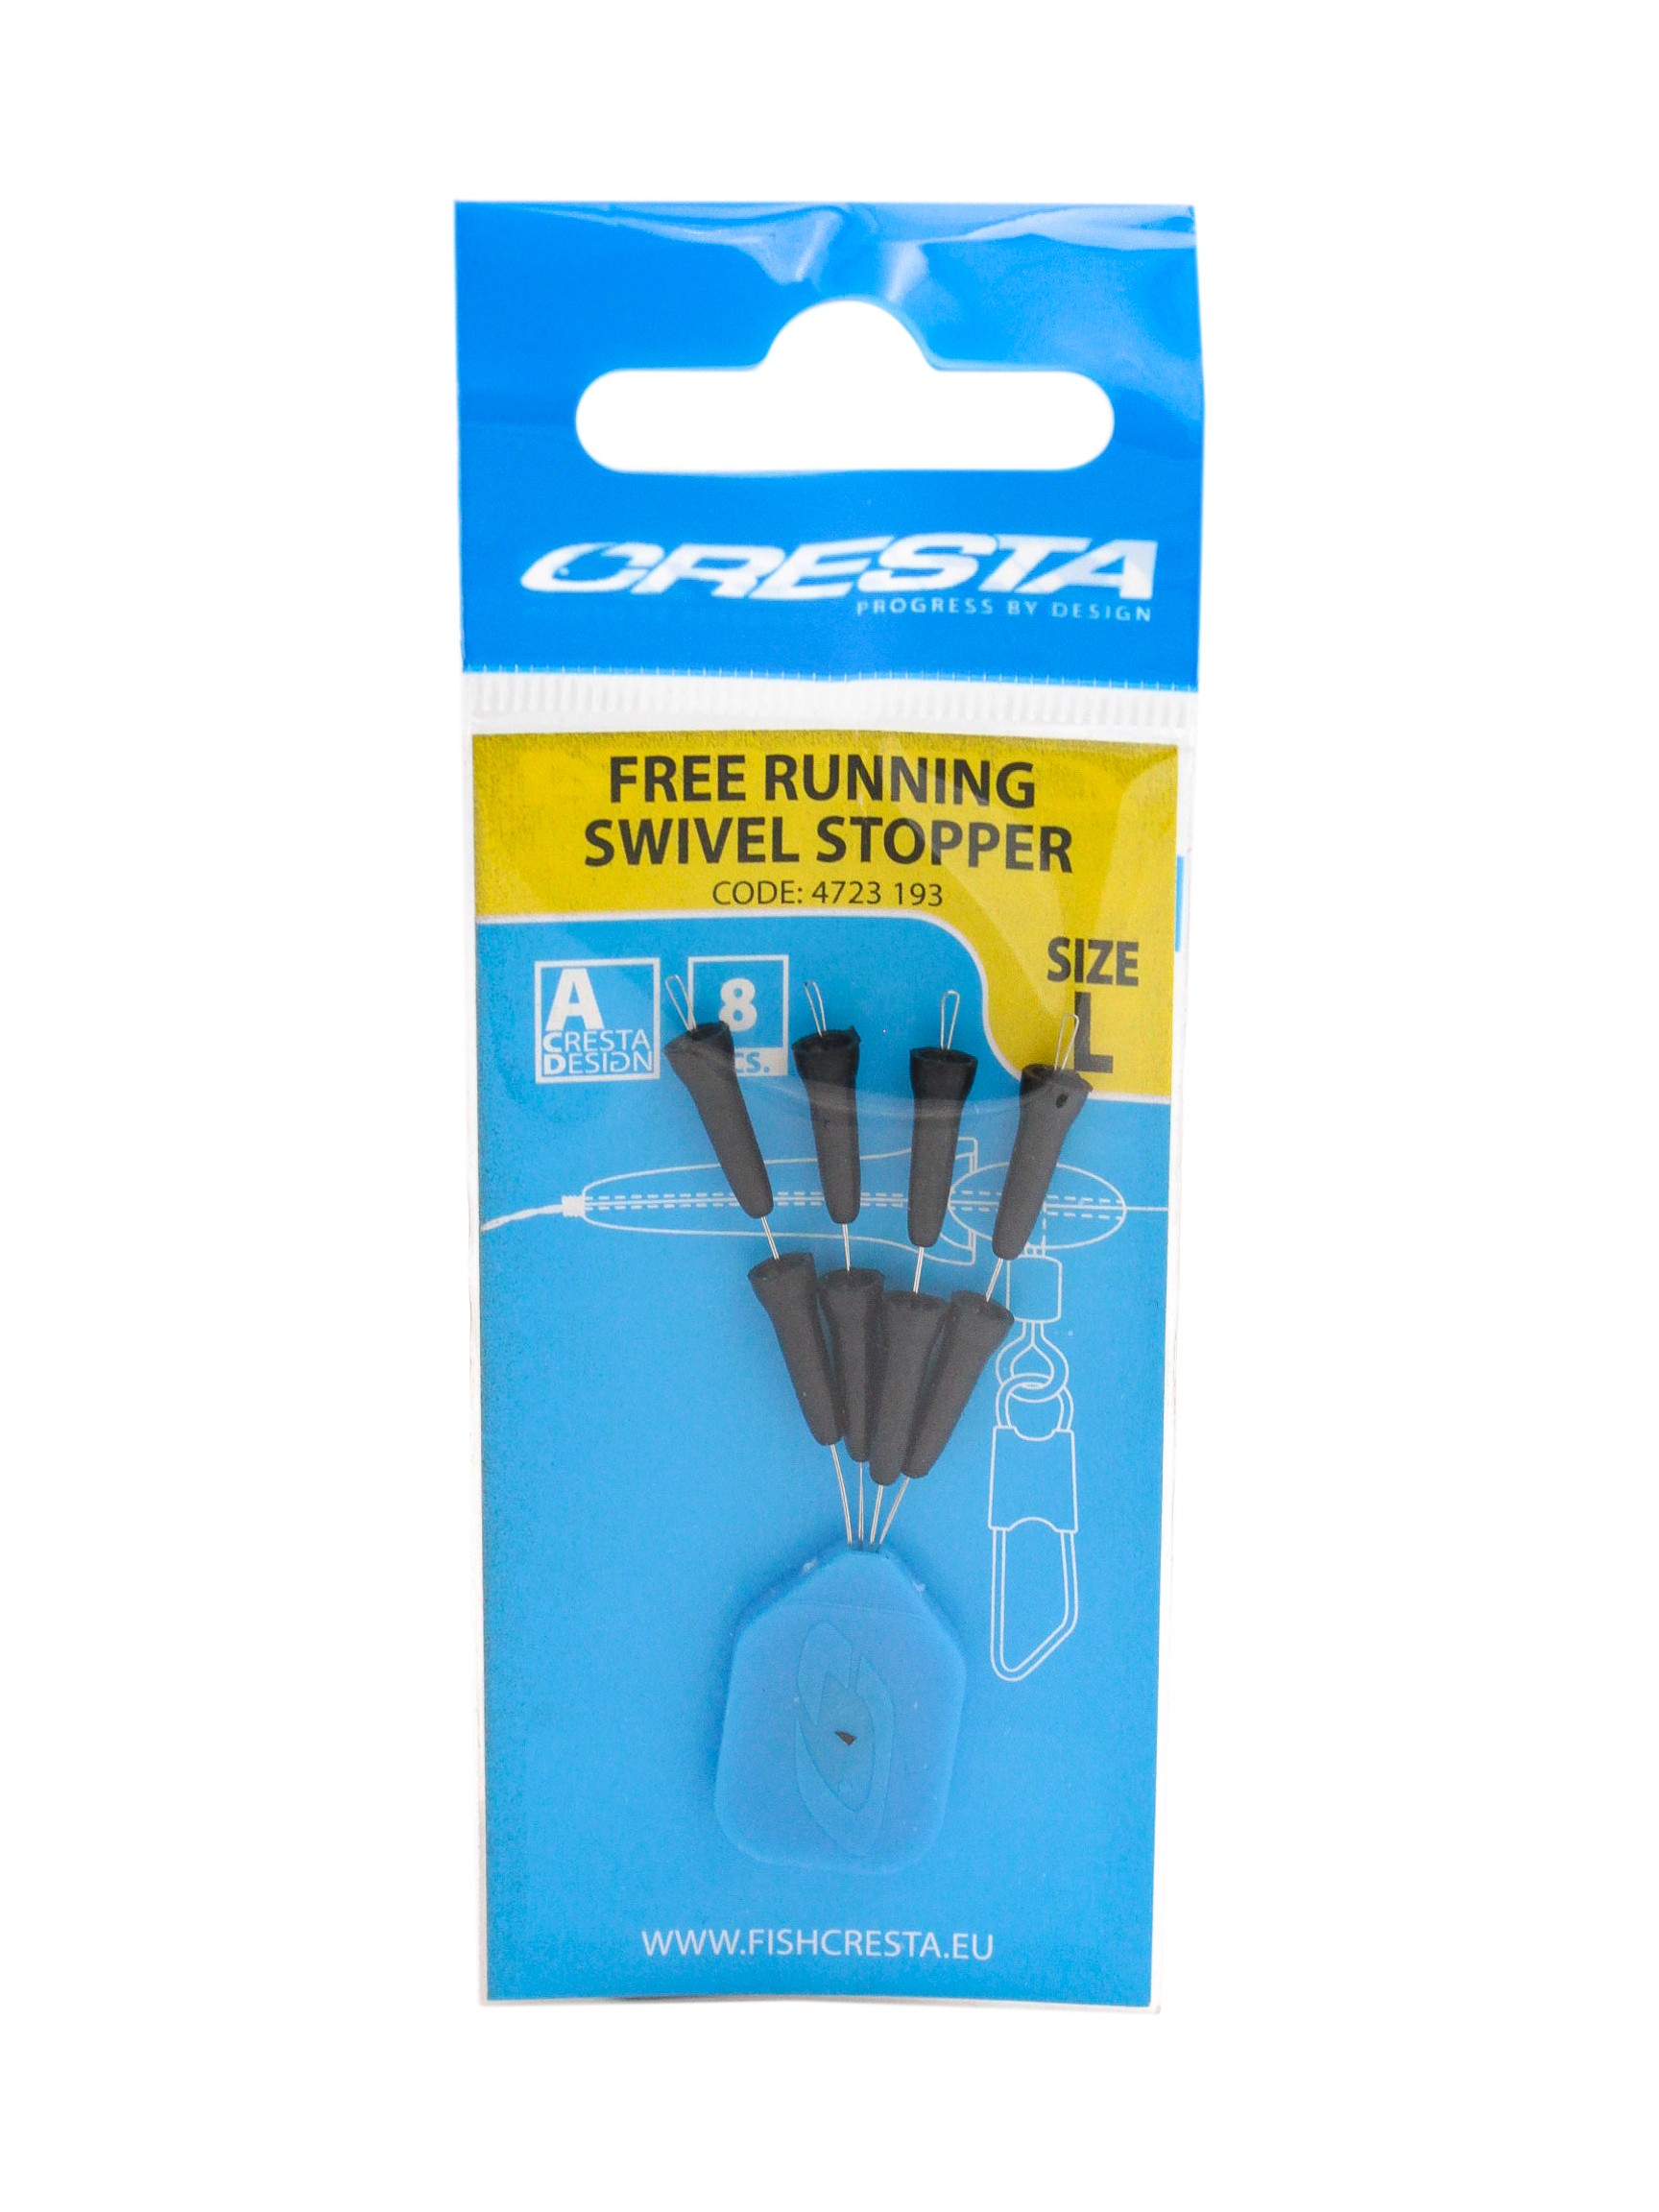 Стопор Cresta free running swivel stoppers large - фото 1